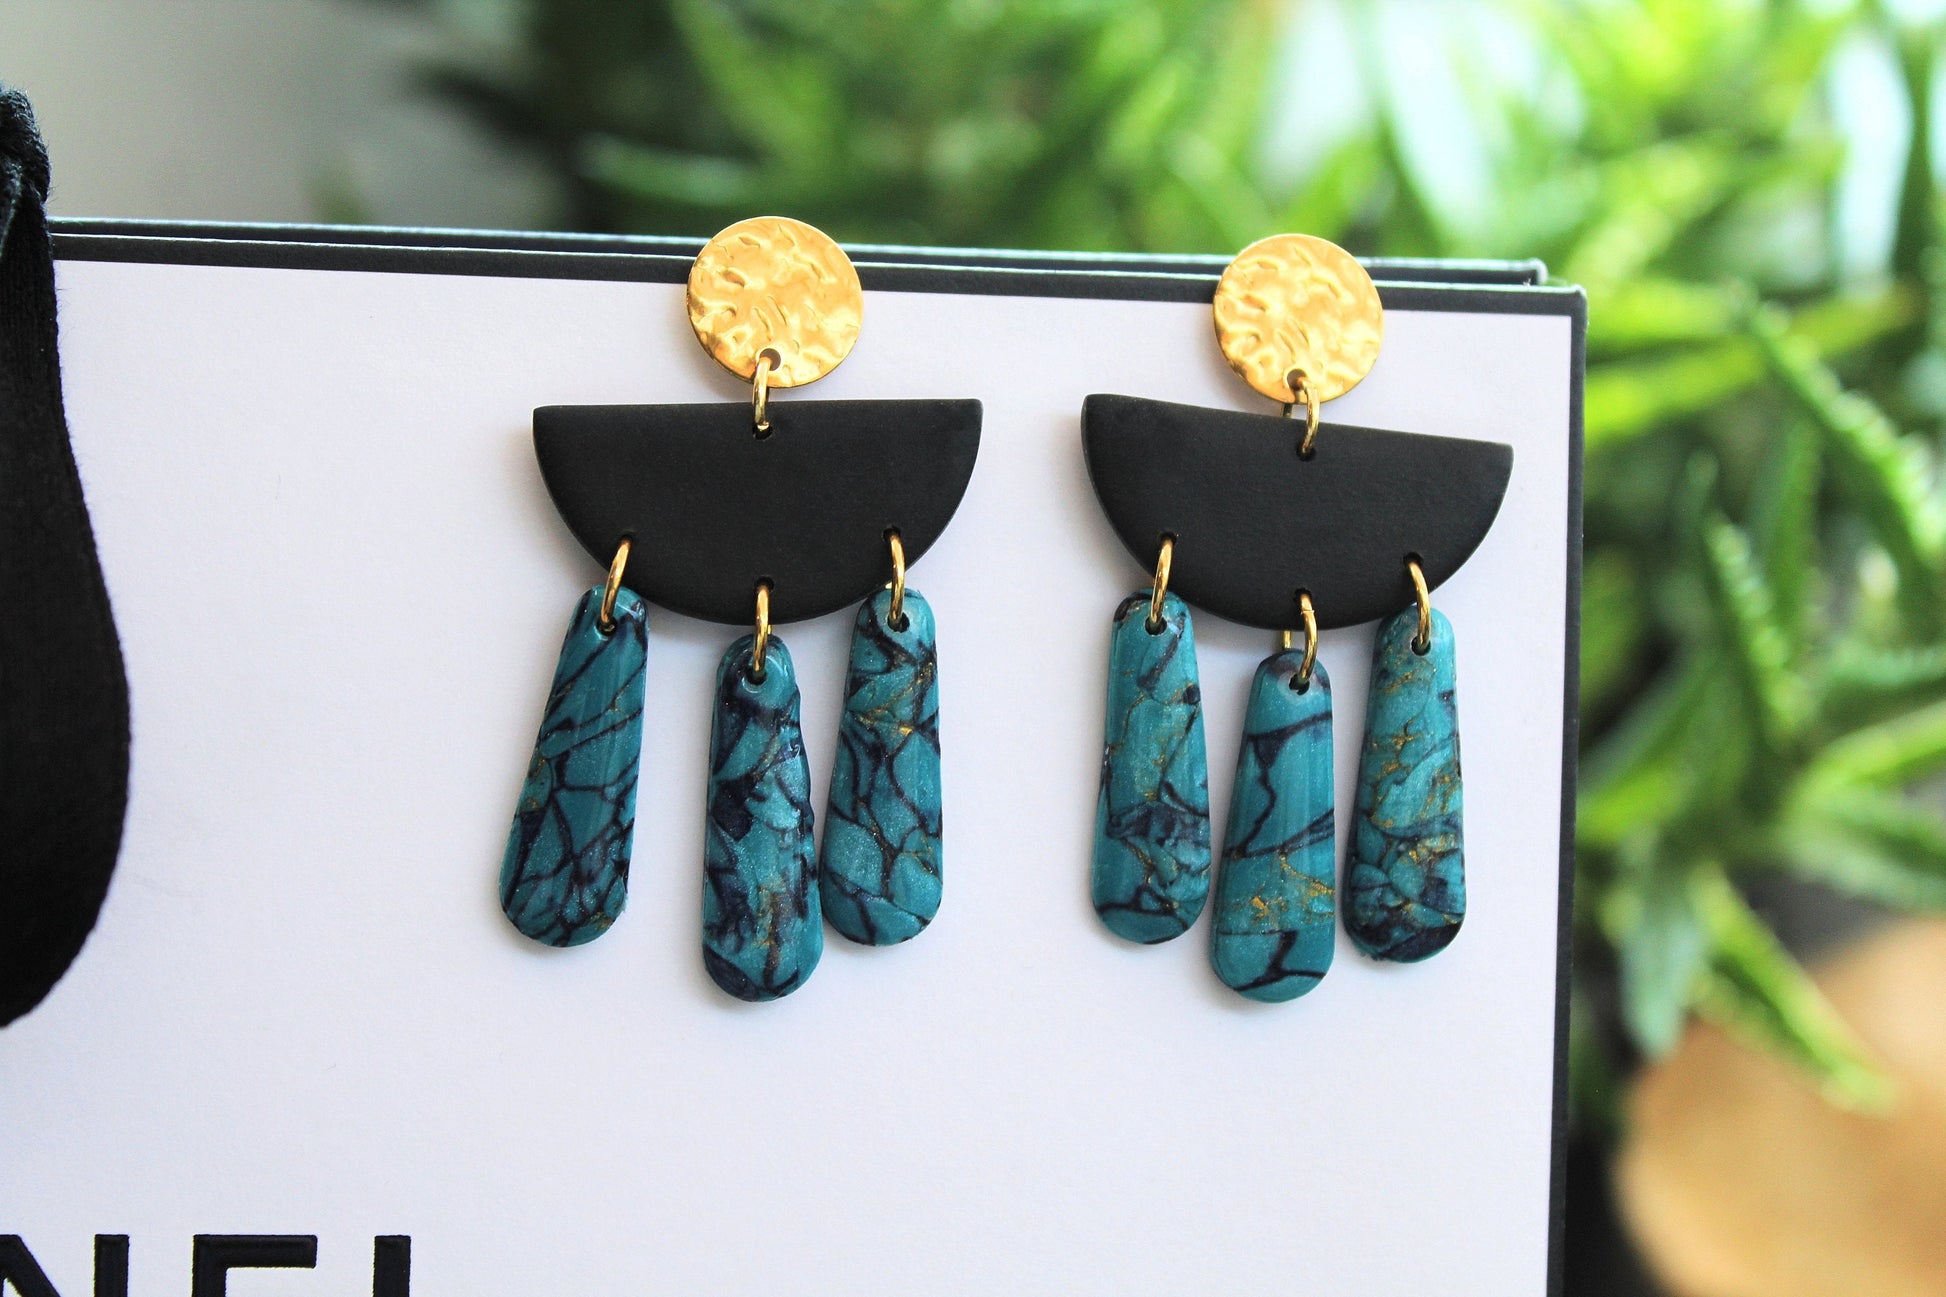 Turquoise Earrings Dangle, Black Turquise Earrings, Polymer Clay Earrings, Handmade Jewelry, Summer Earrings, Turquoise Earrings Gold, Gift